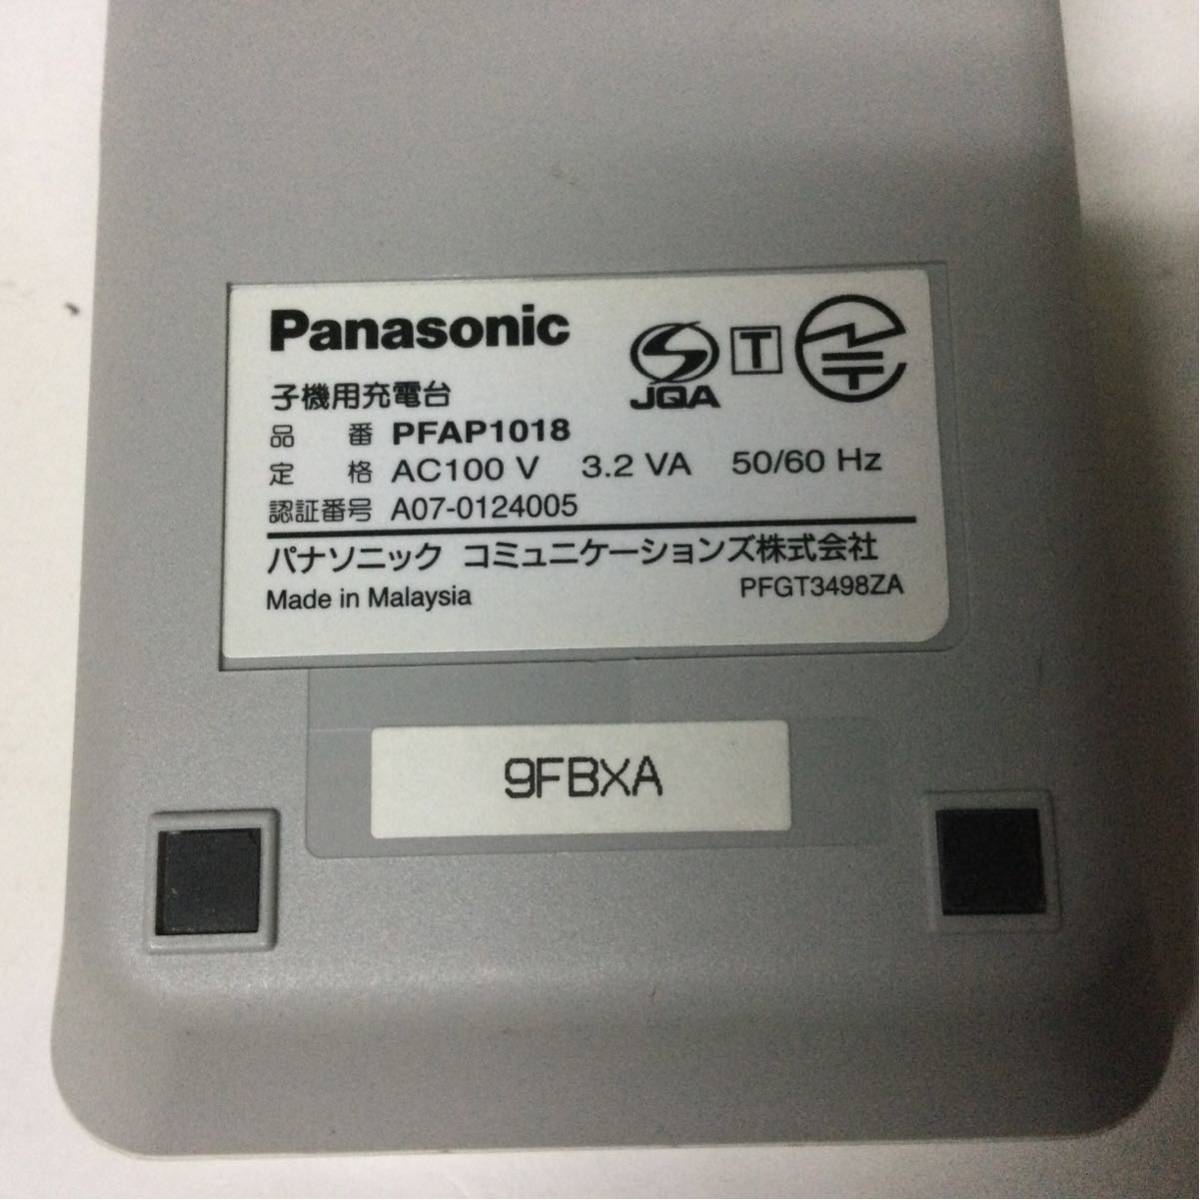 Panasonic cordless handset for charge stand PFAP1018 operation not yet verification Panasonic 